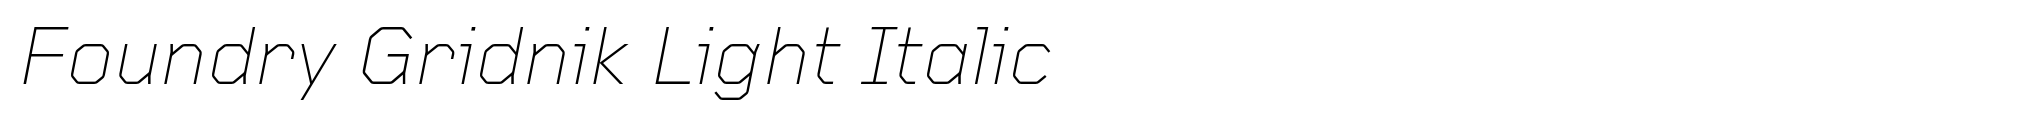 Foundry Gridnik Light Italic image